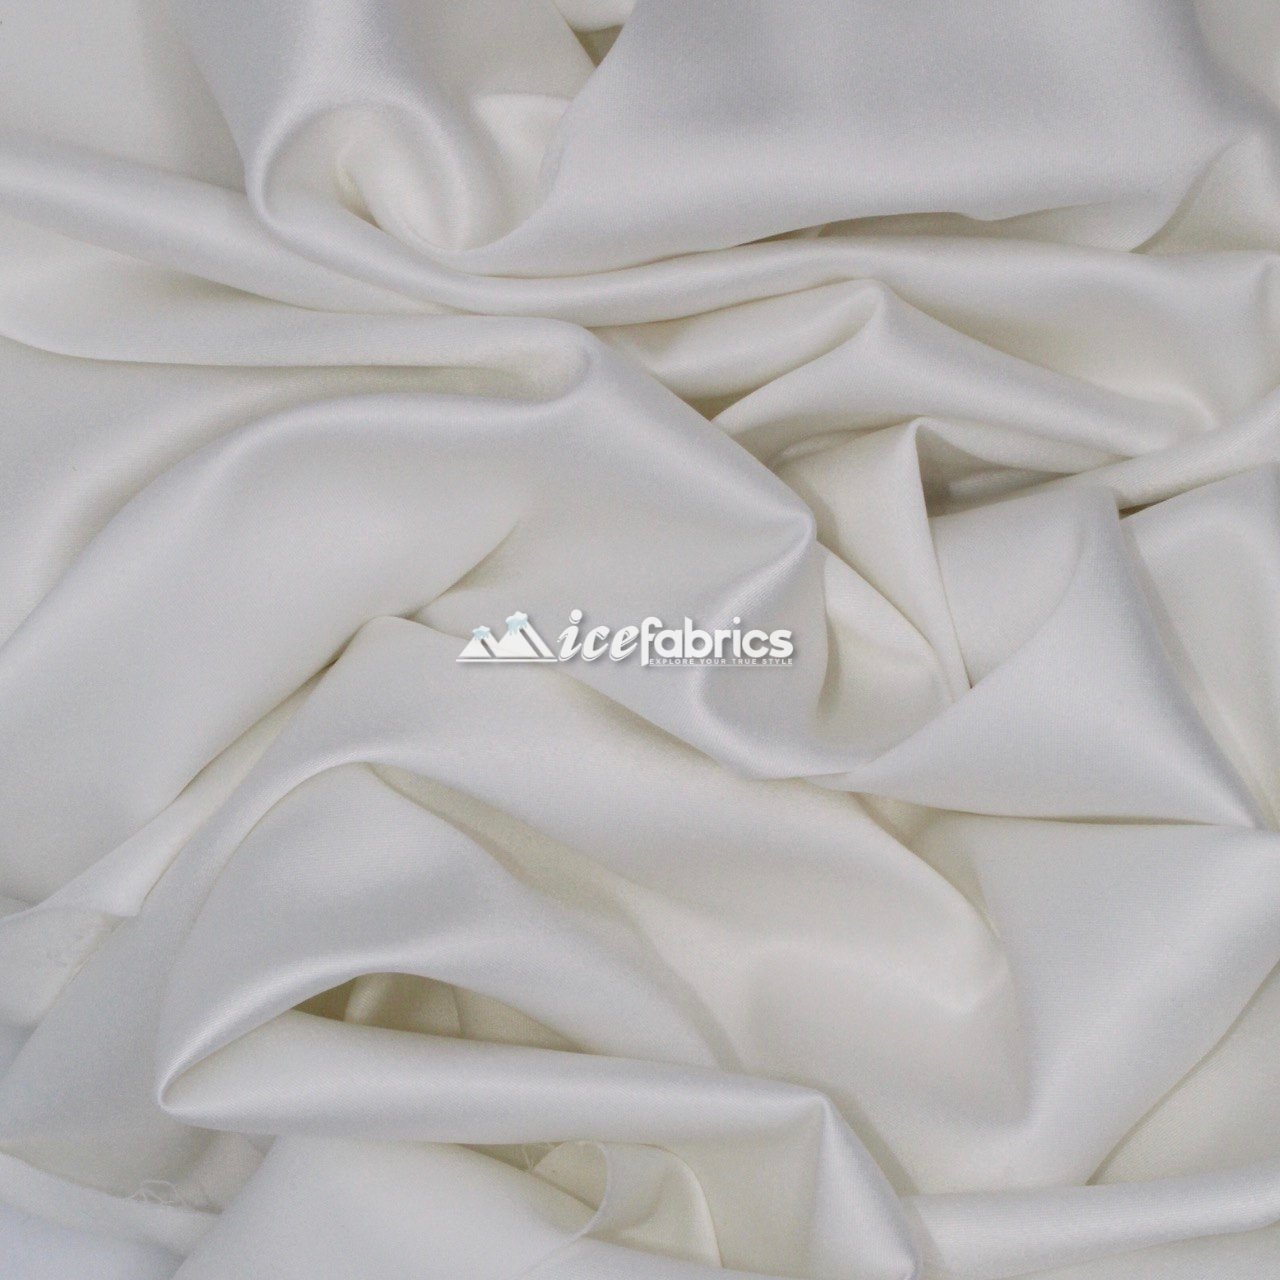 White Crepe Fabric, Bright White Crepe Fabric by Yard, Wedding Dress Fabric,  Apparel Fabric, Bridal Fabric, Pure White Stretchy Crepe Fabric -   Canada